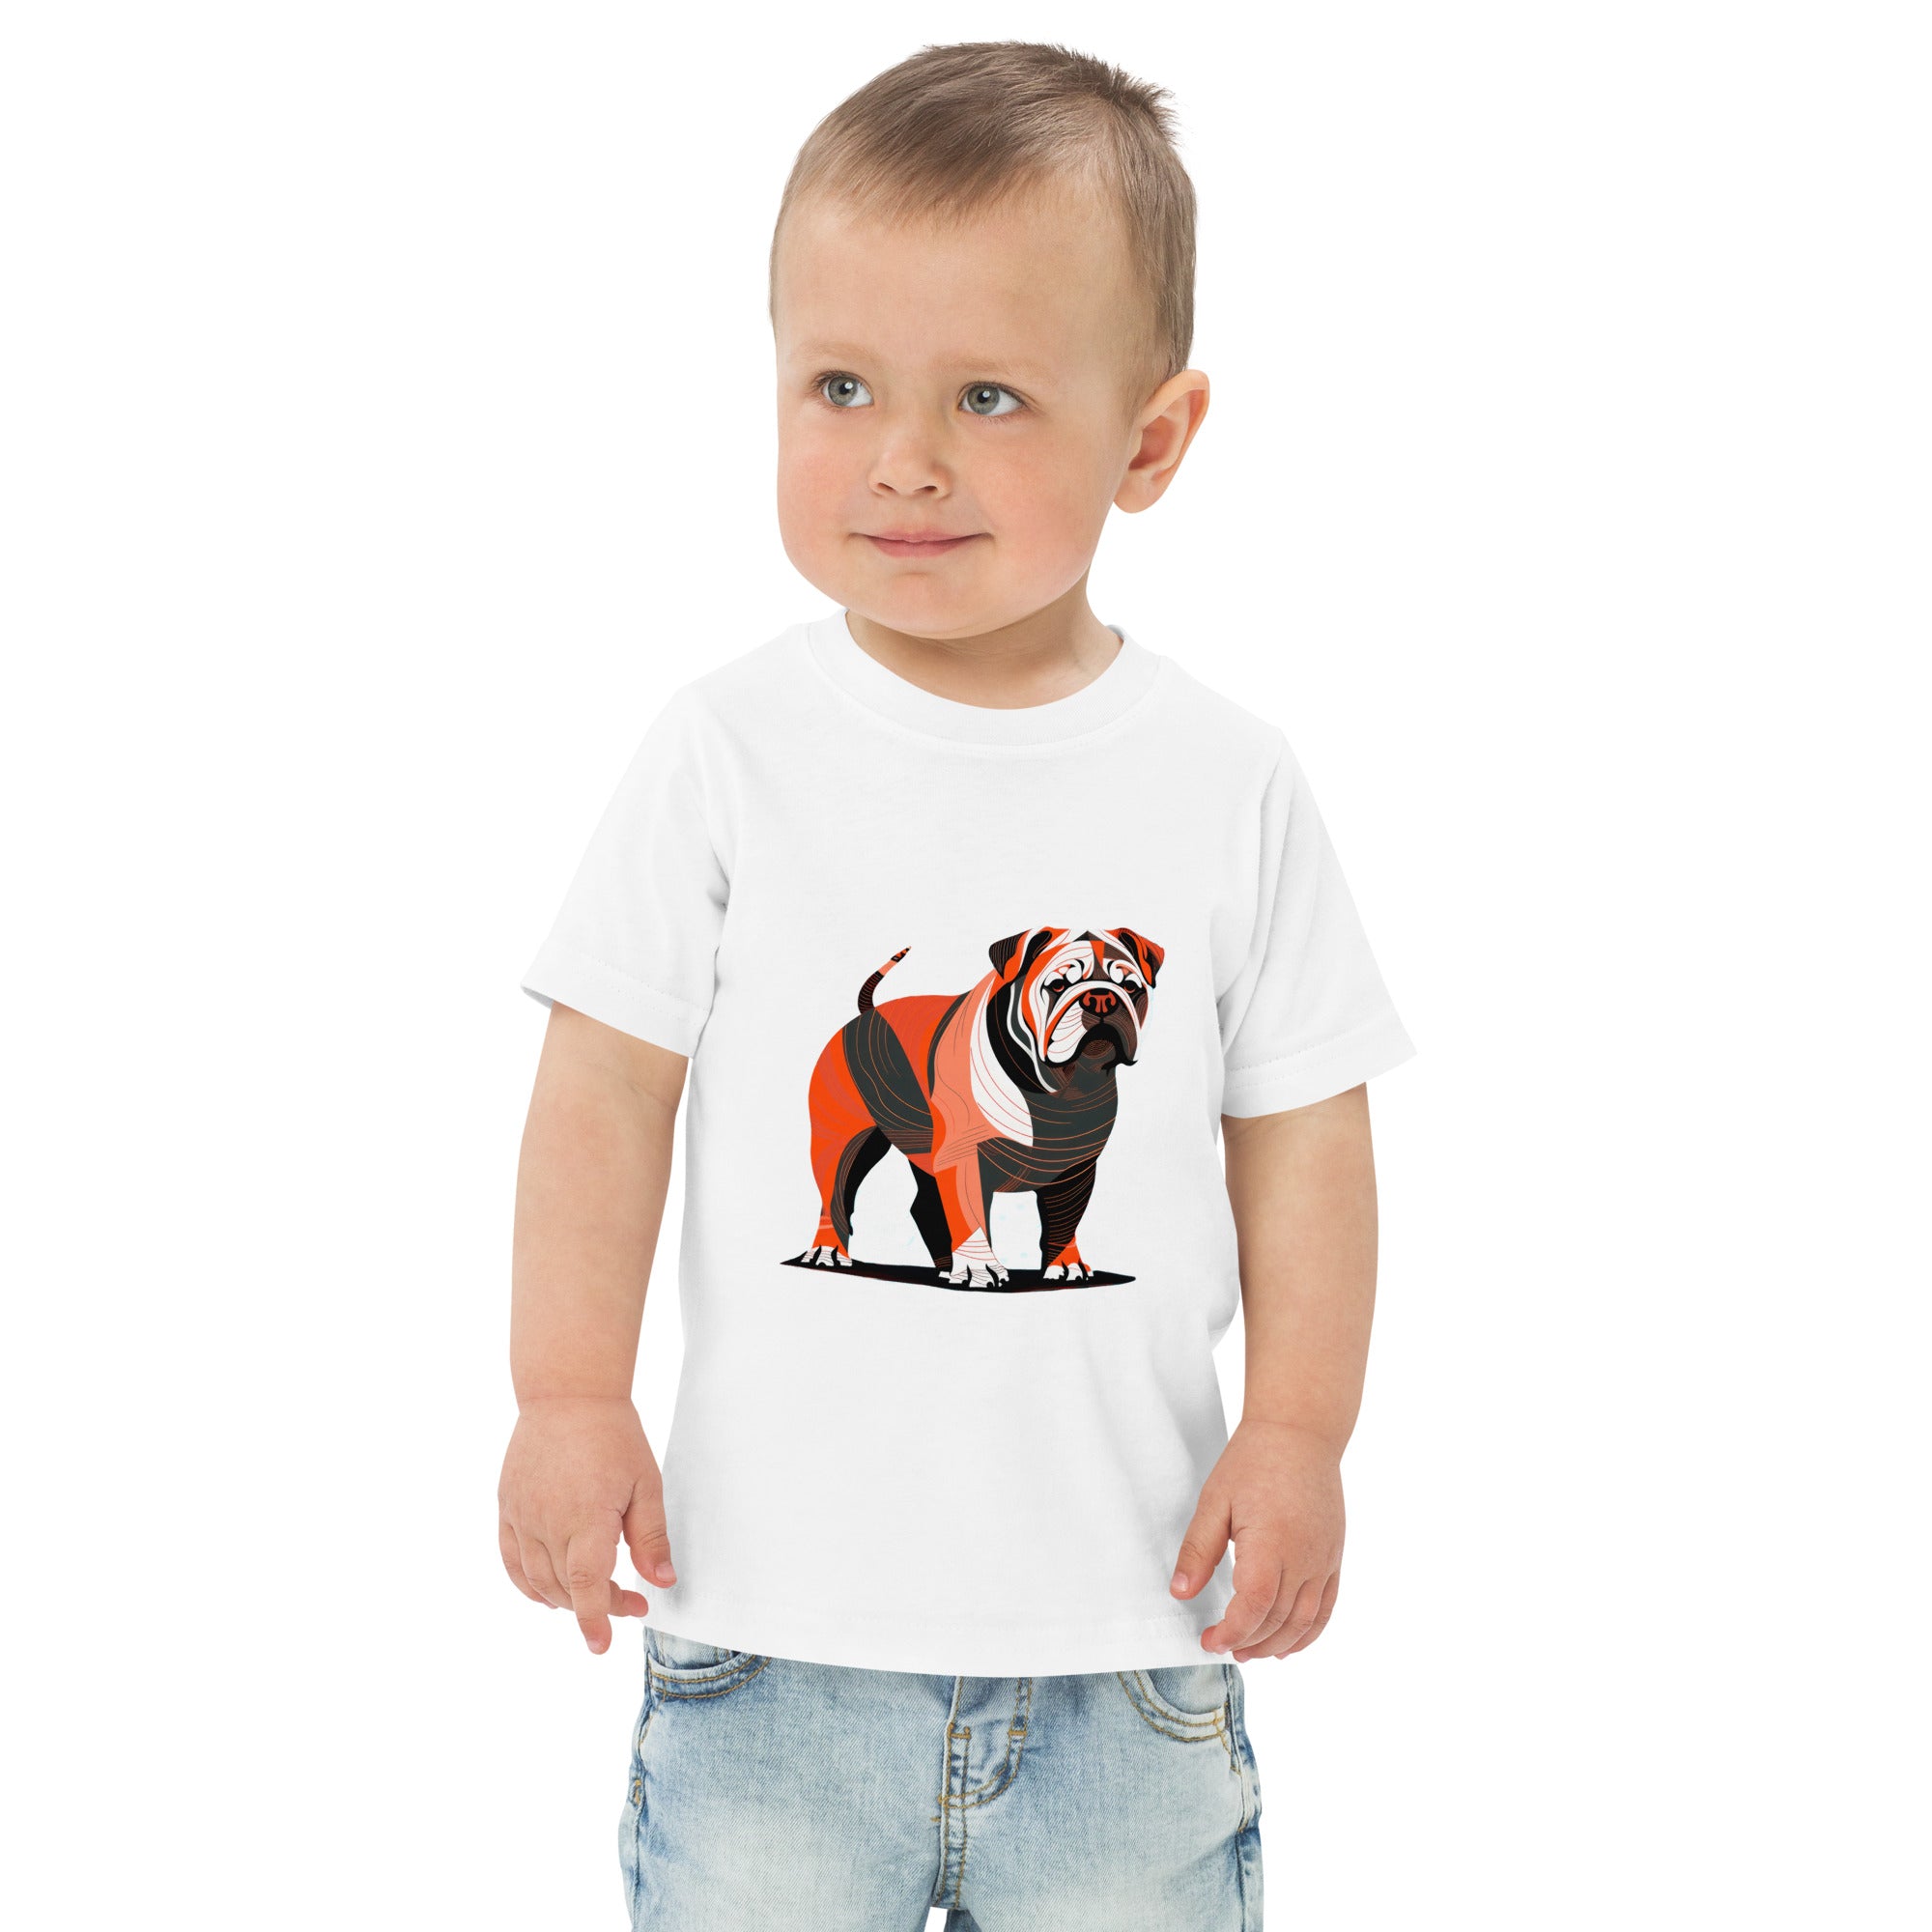 Canine’s Calm Cuddles Toddler T-Shirt